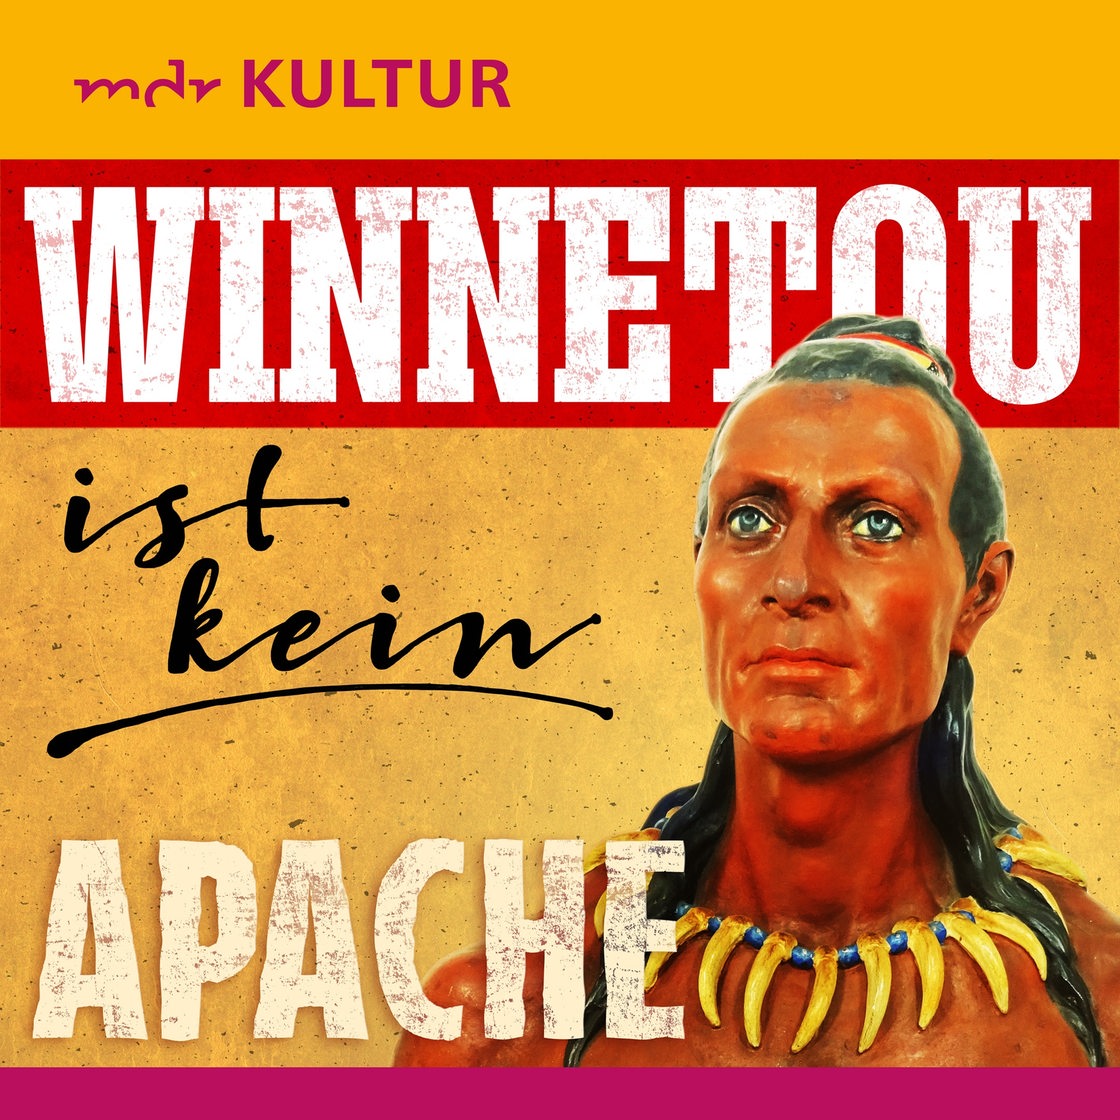 Podcast Winnetou ist kein Apache